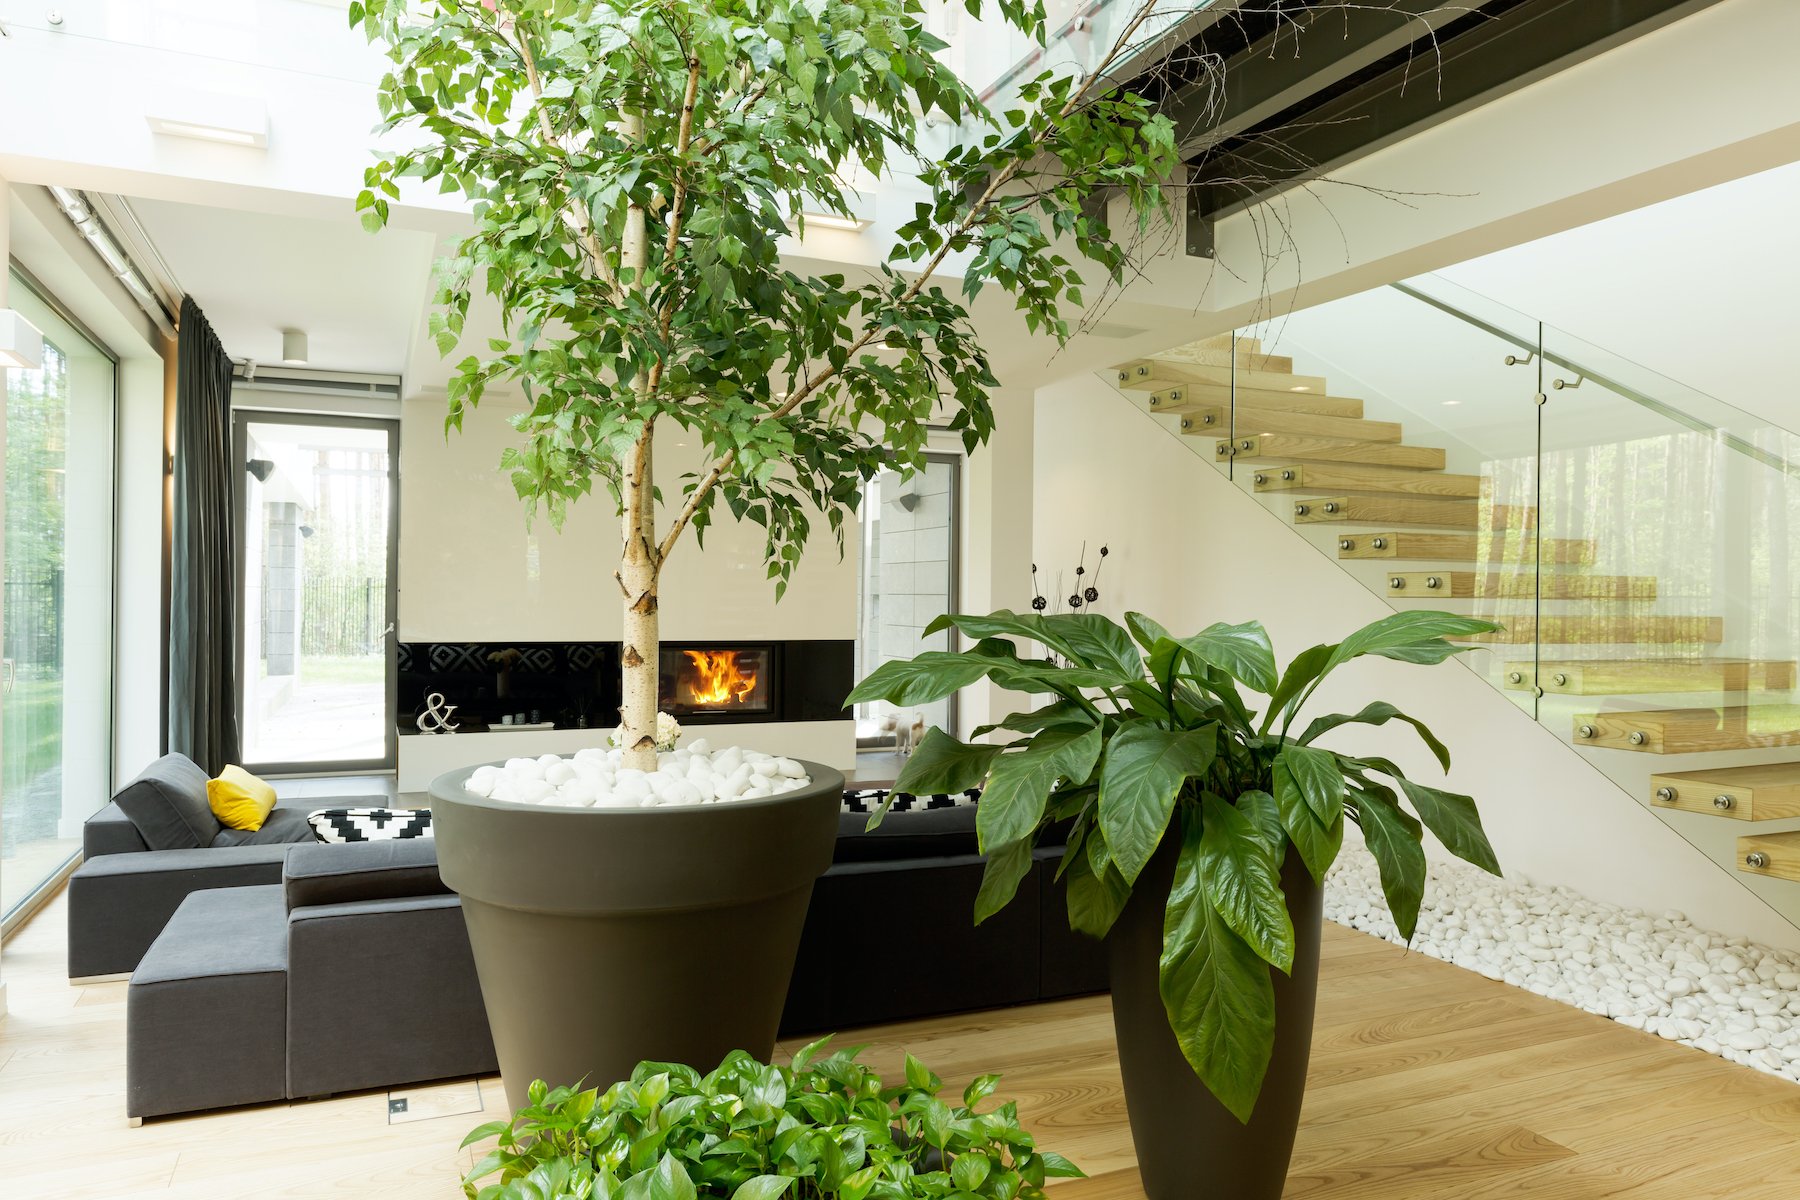 Interior Plantscape in a living room